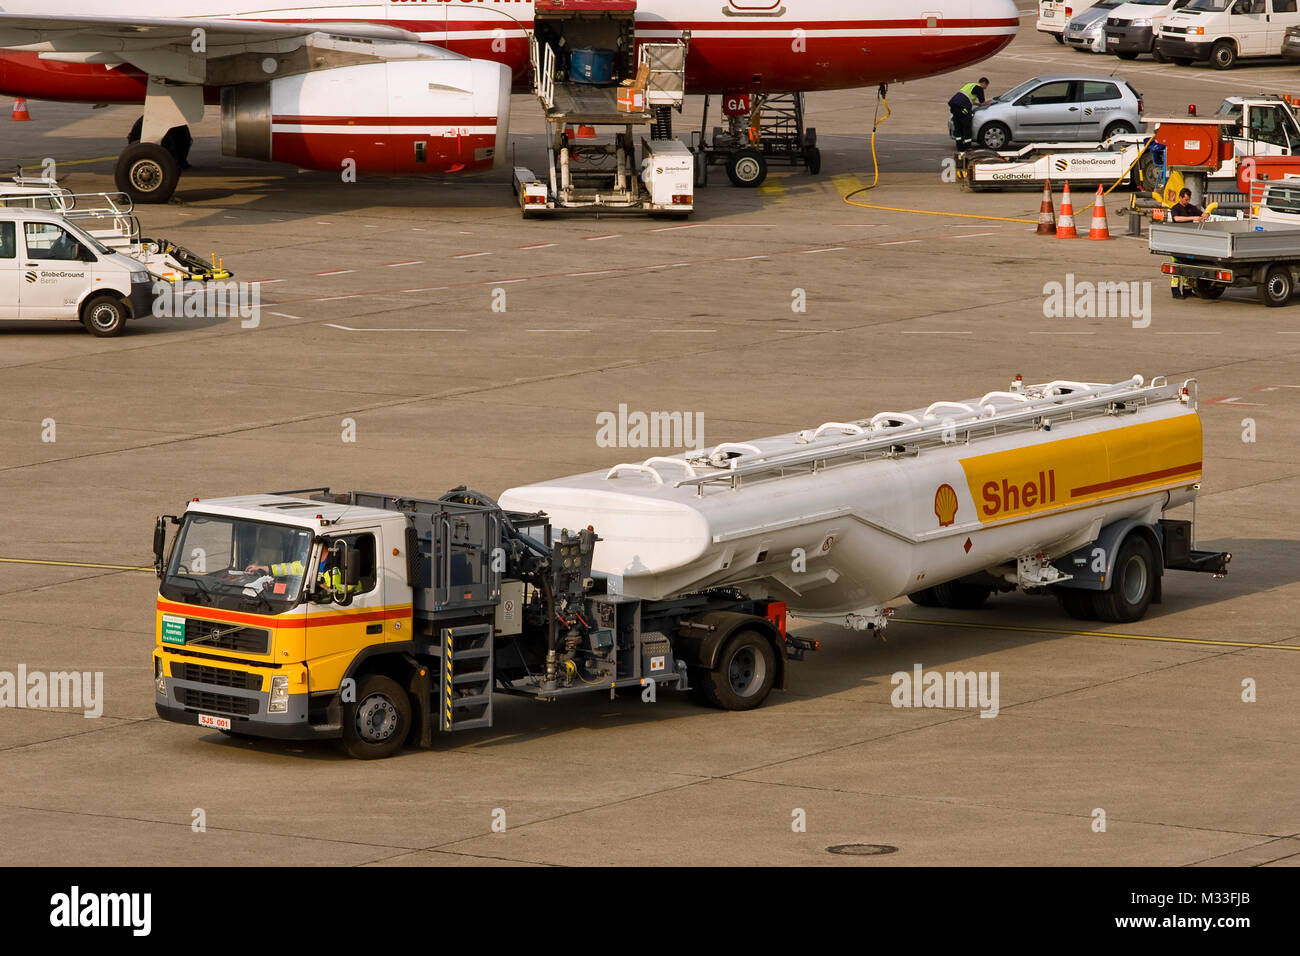 Tankwagen auf dem Flughafen TXL Berlino Tegel Foto Stock